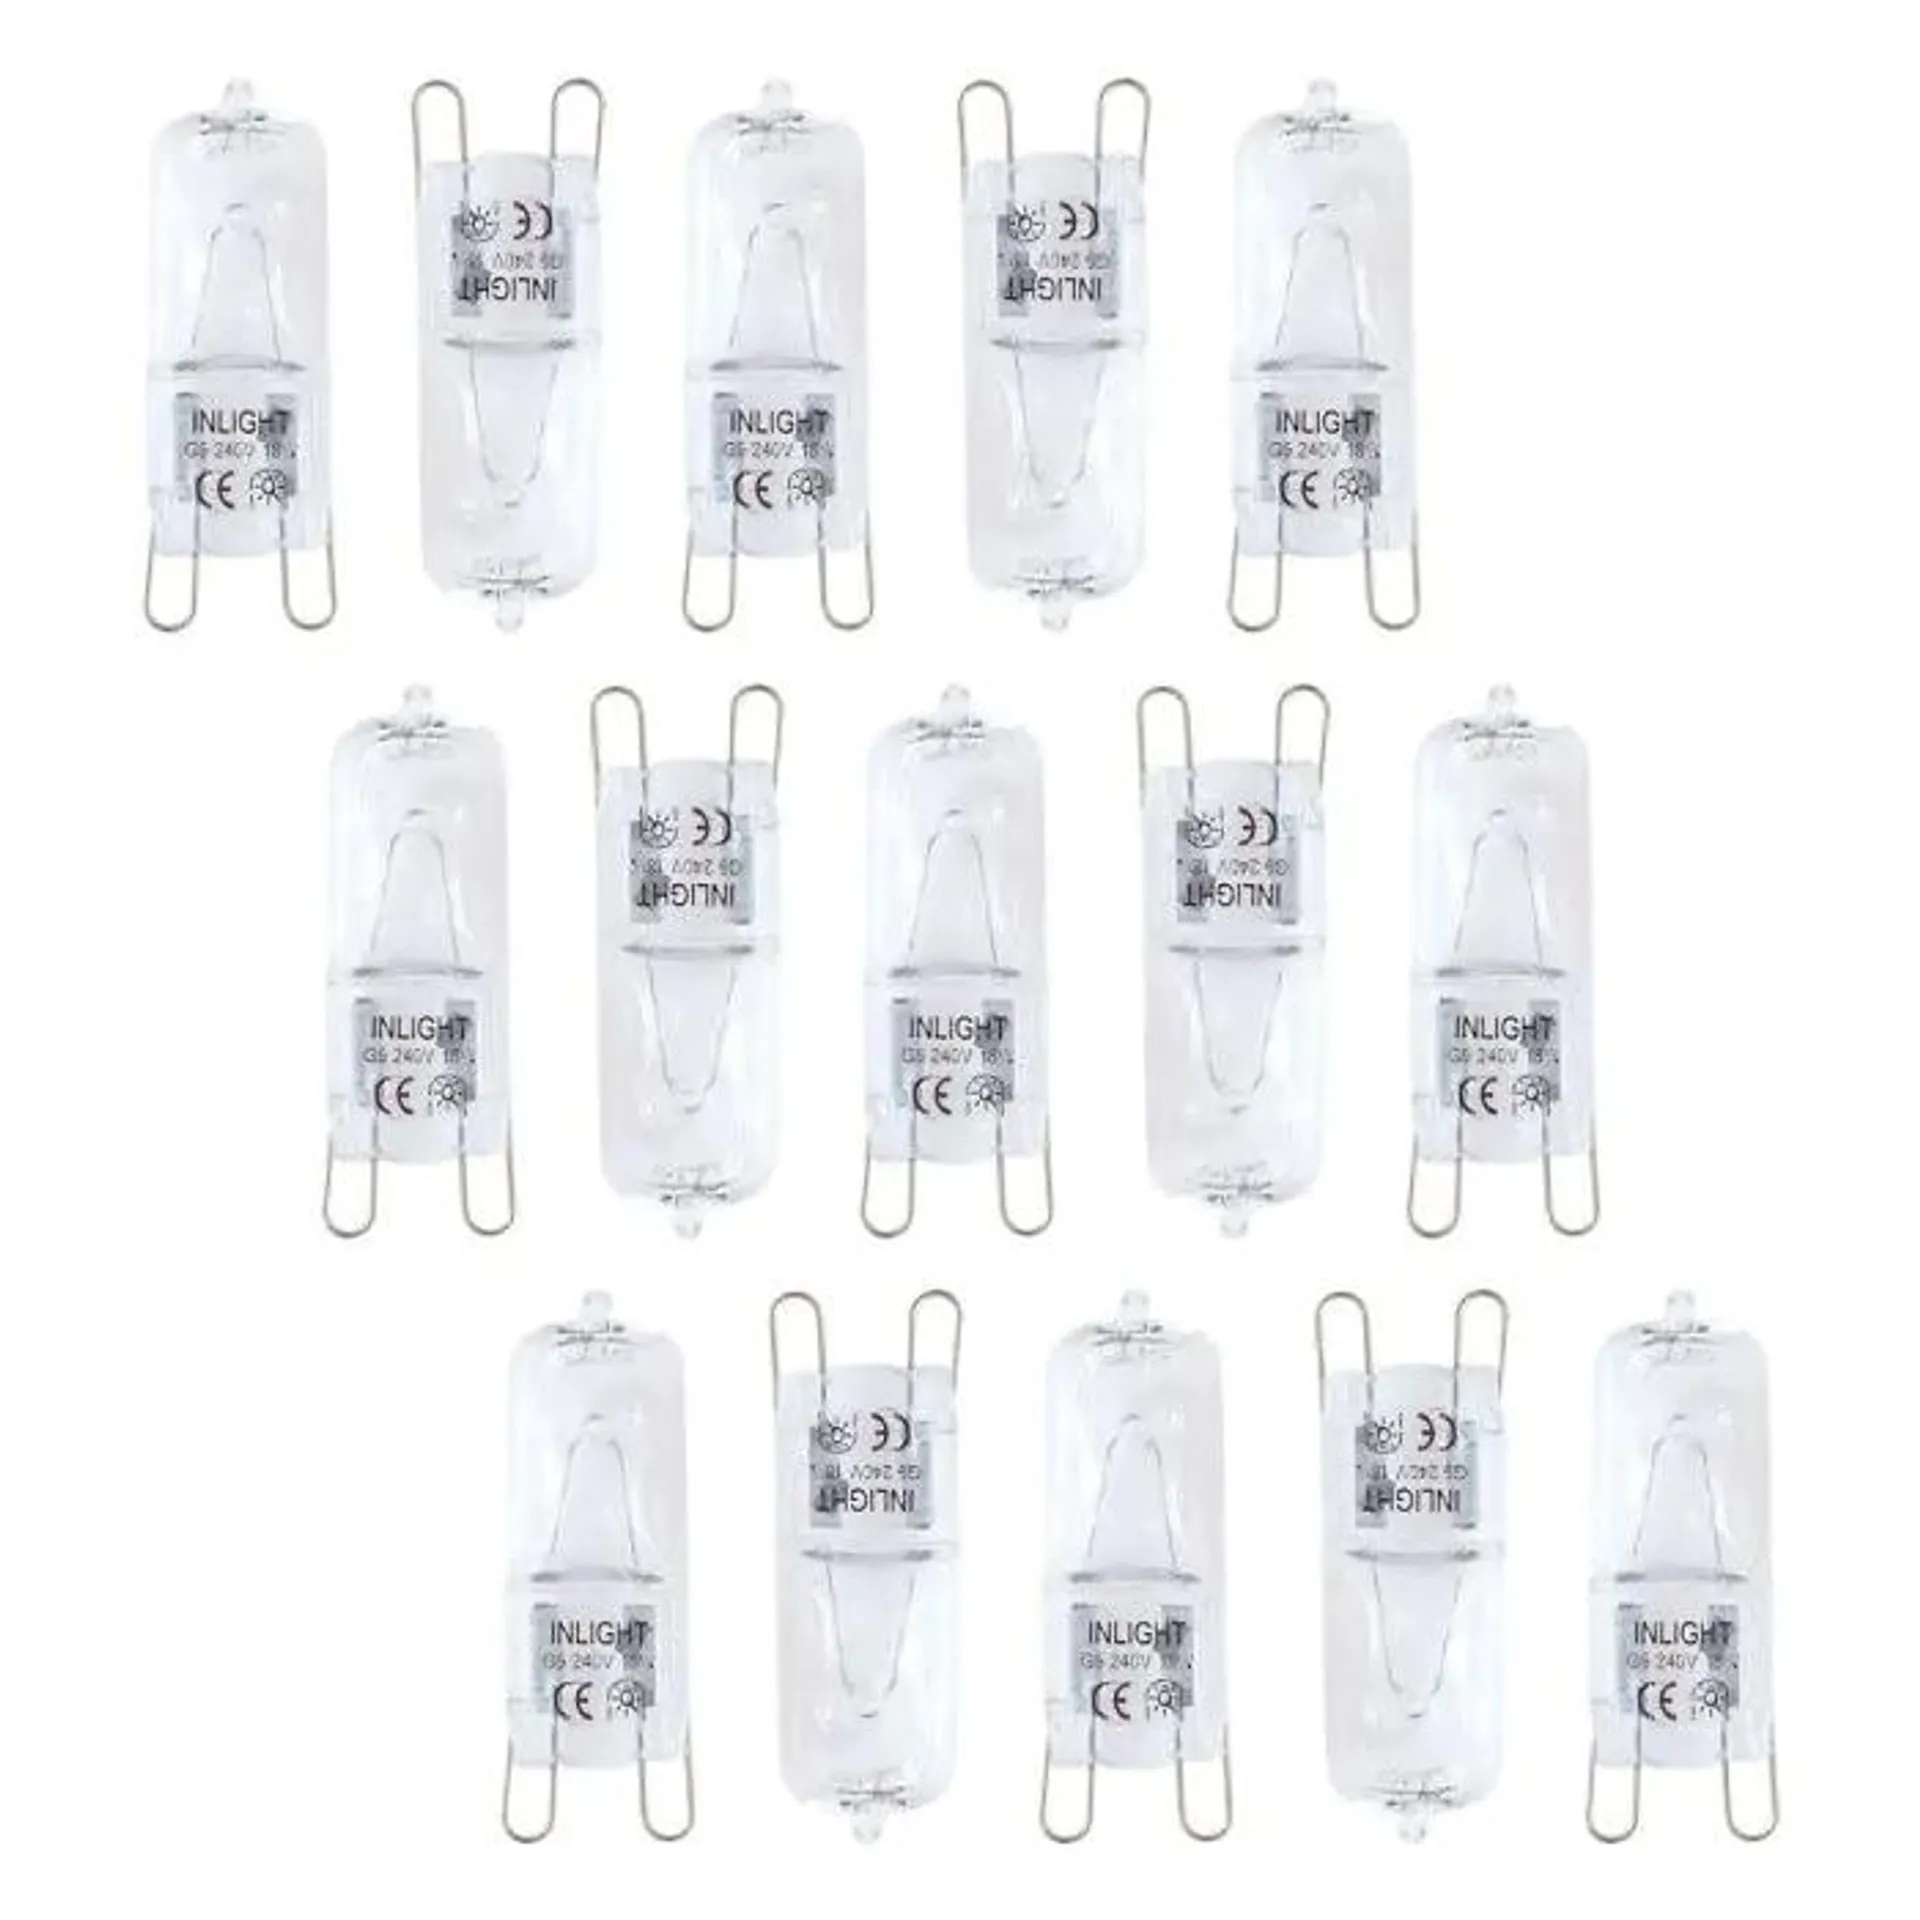 15 Pack of 18 Watt G9 Eco Halogen Light Bulbs, Clear